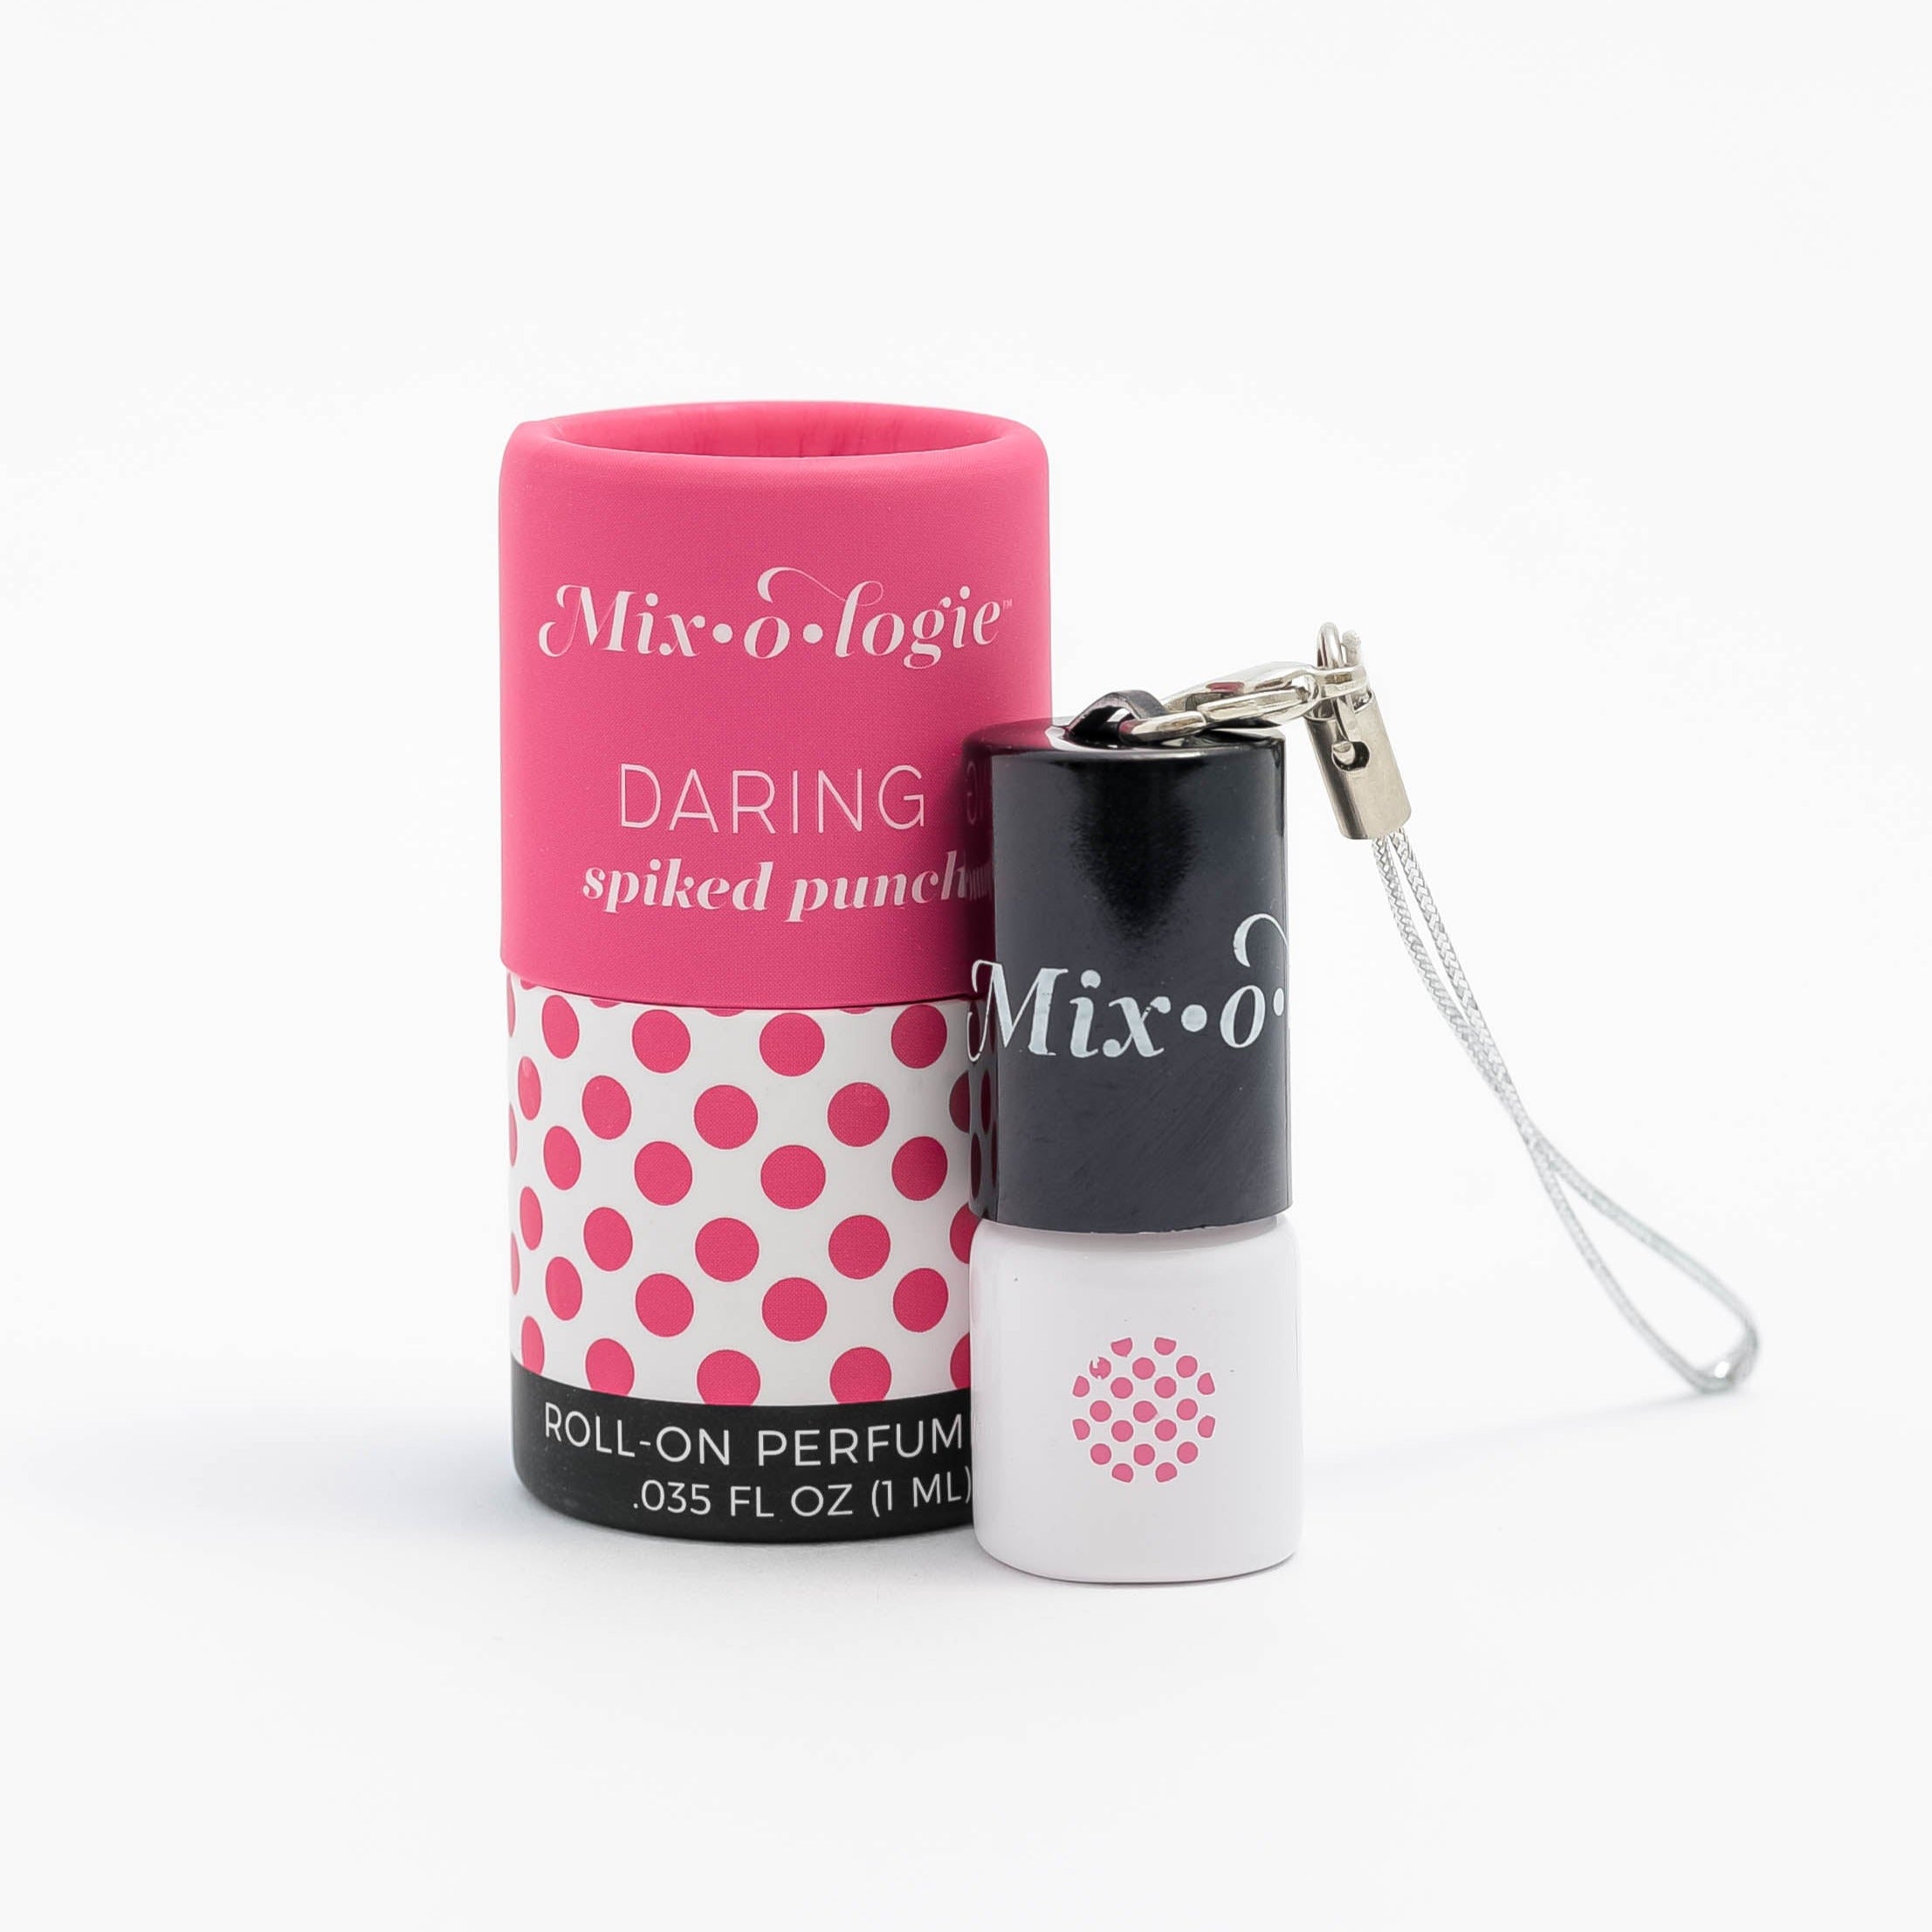 Tempted (coconut kiss) Mini Rollerball Perfume Keychain (1 mL)